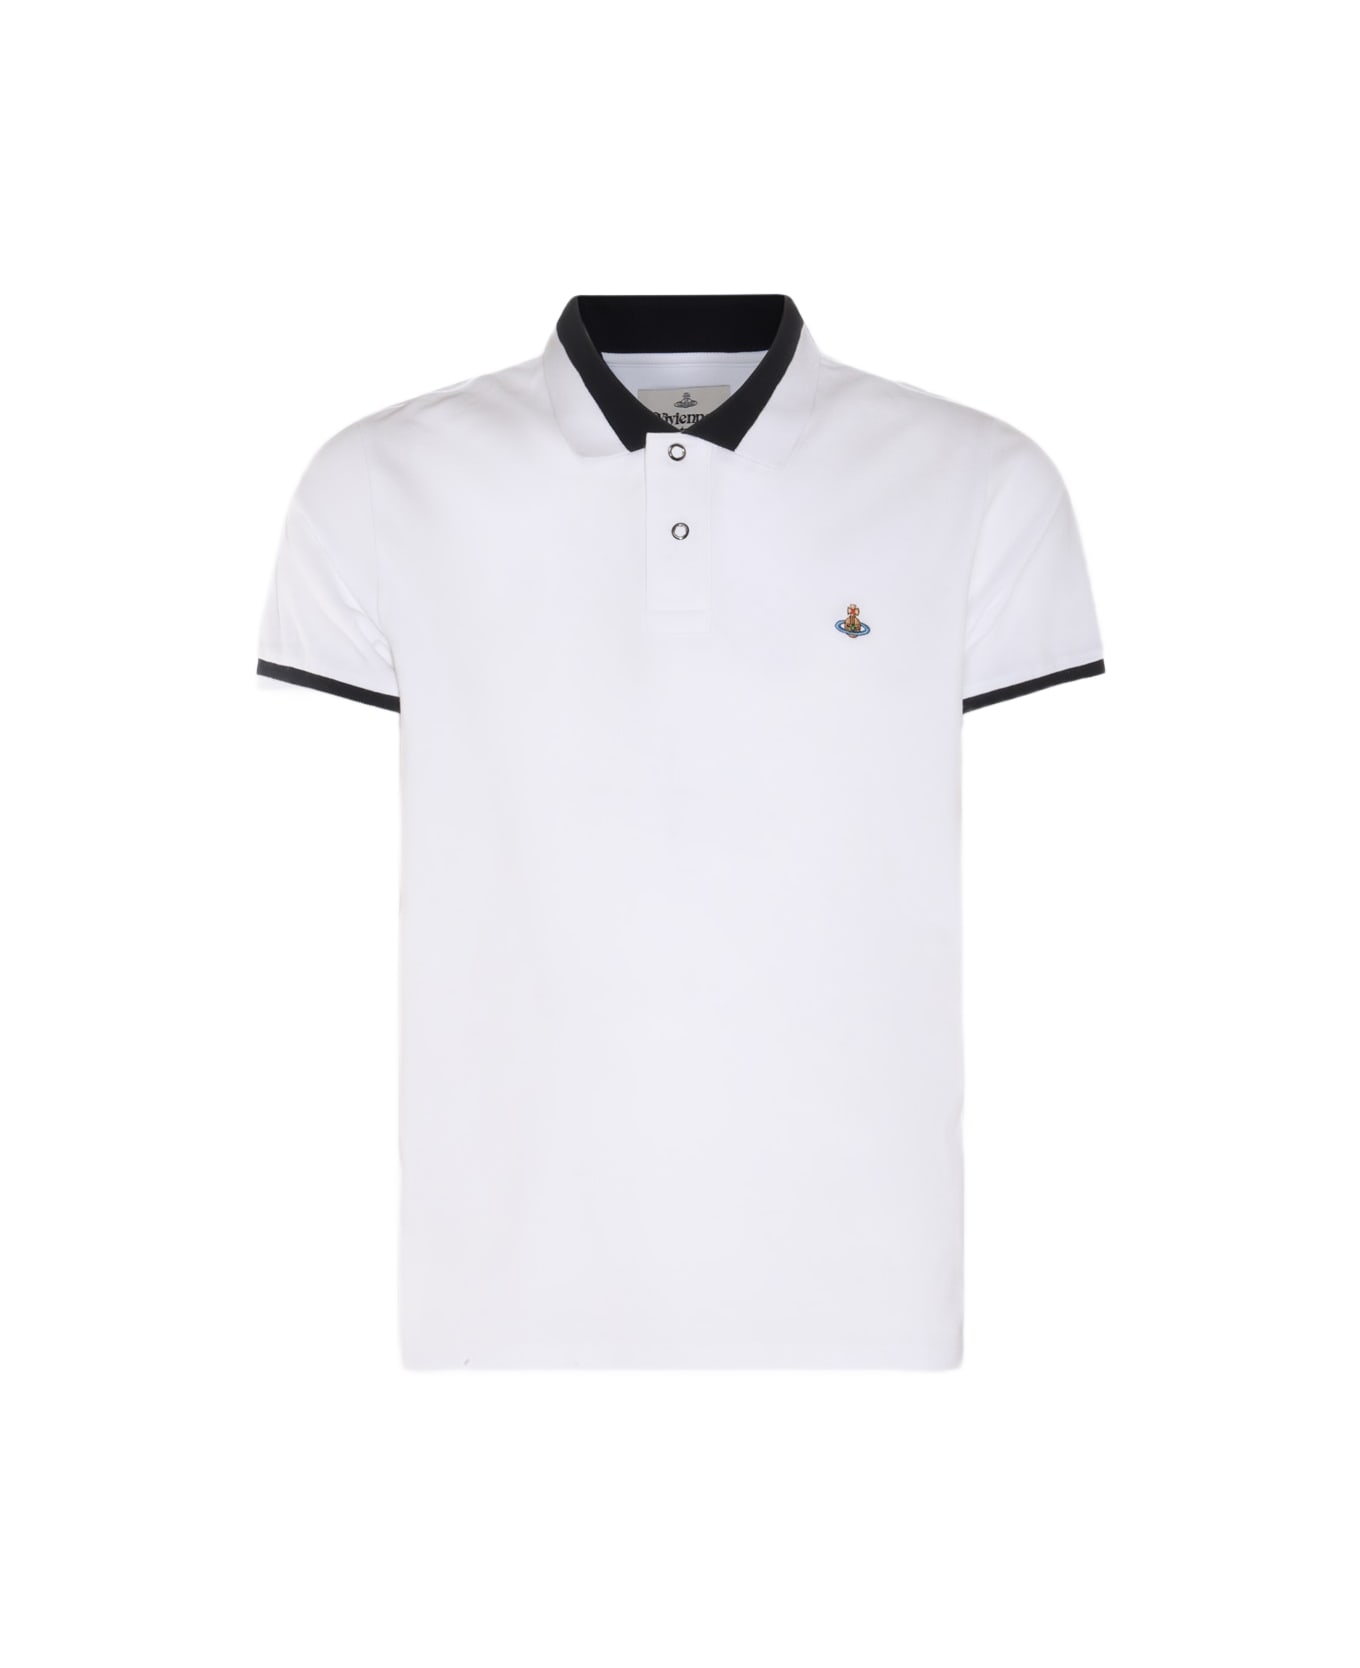 Vivienne Westwood White And Black Cotton Polo Shirt - White